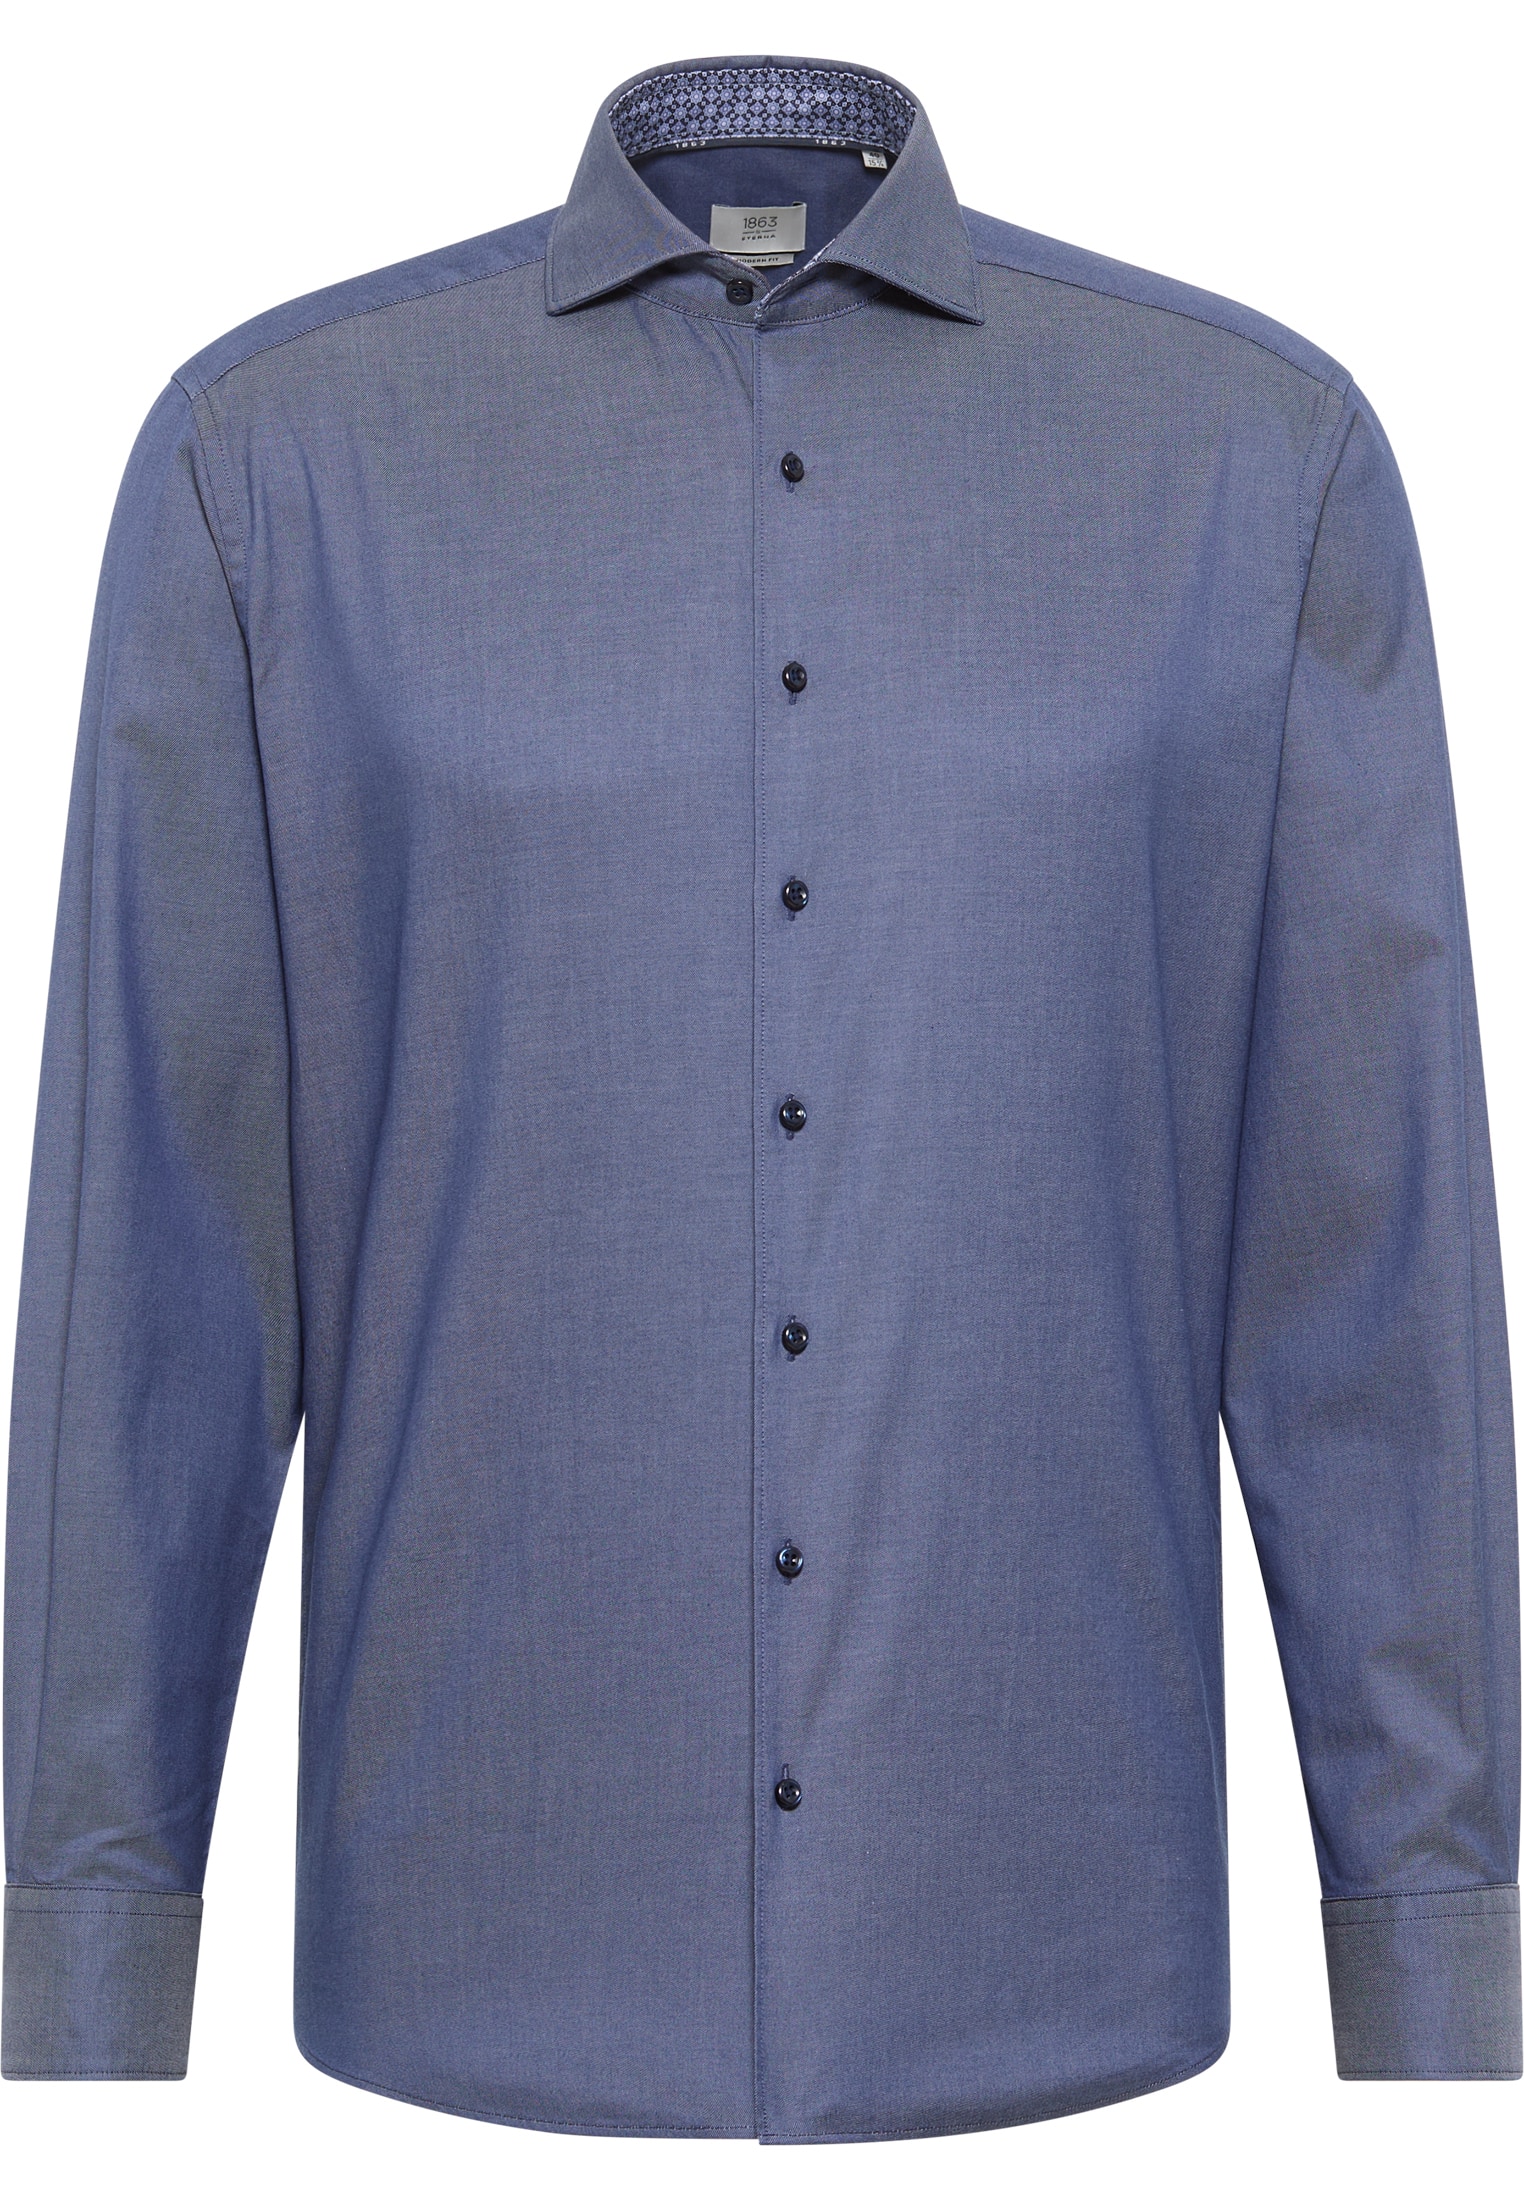 MODERN FIT Soft Luxury Shirt bleu uni